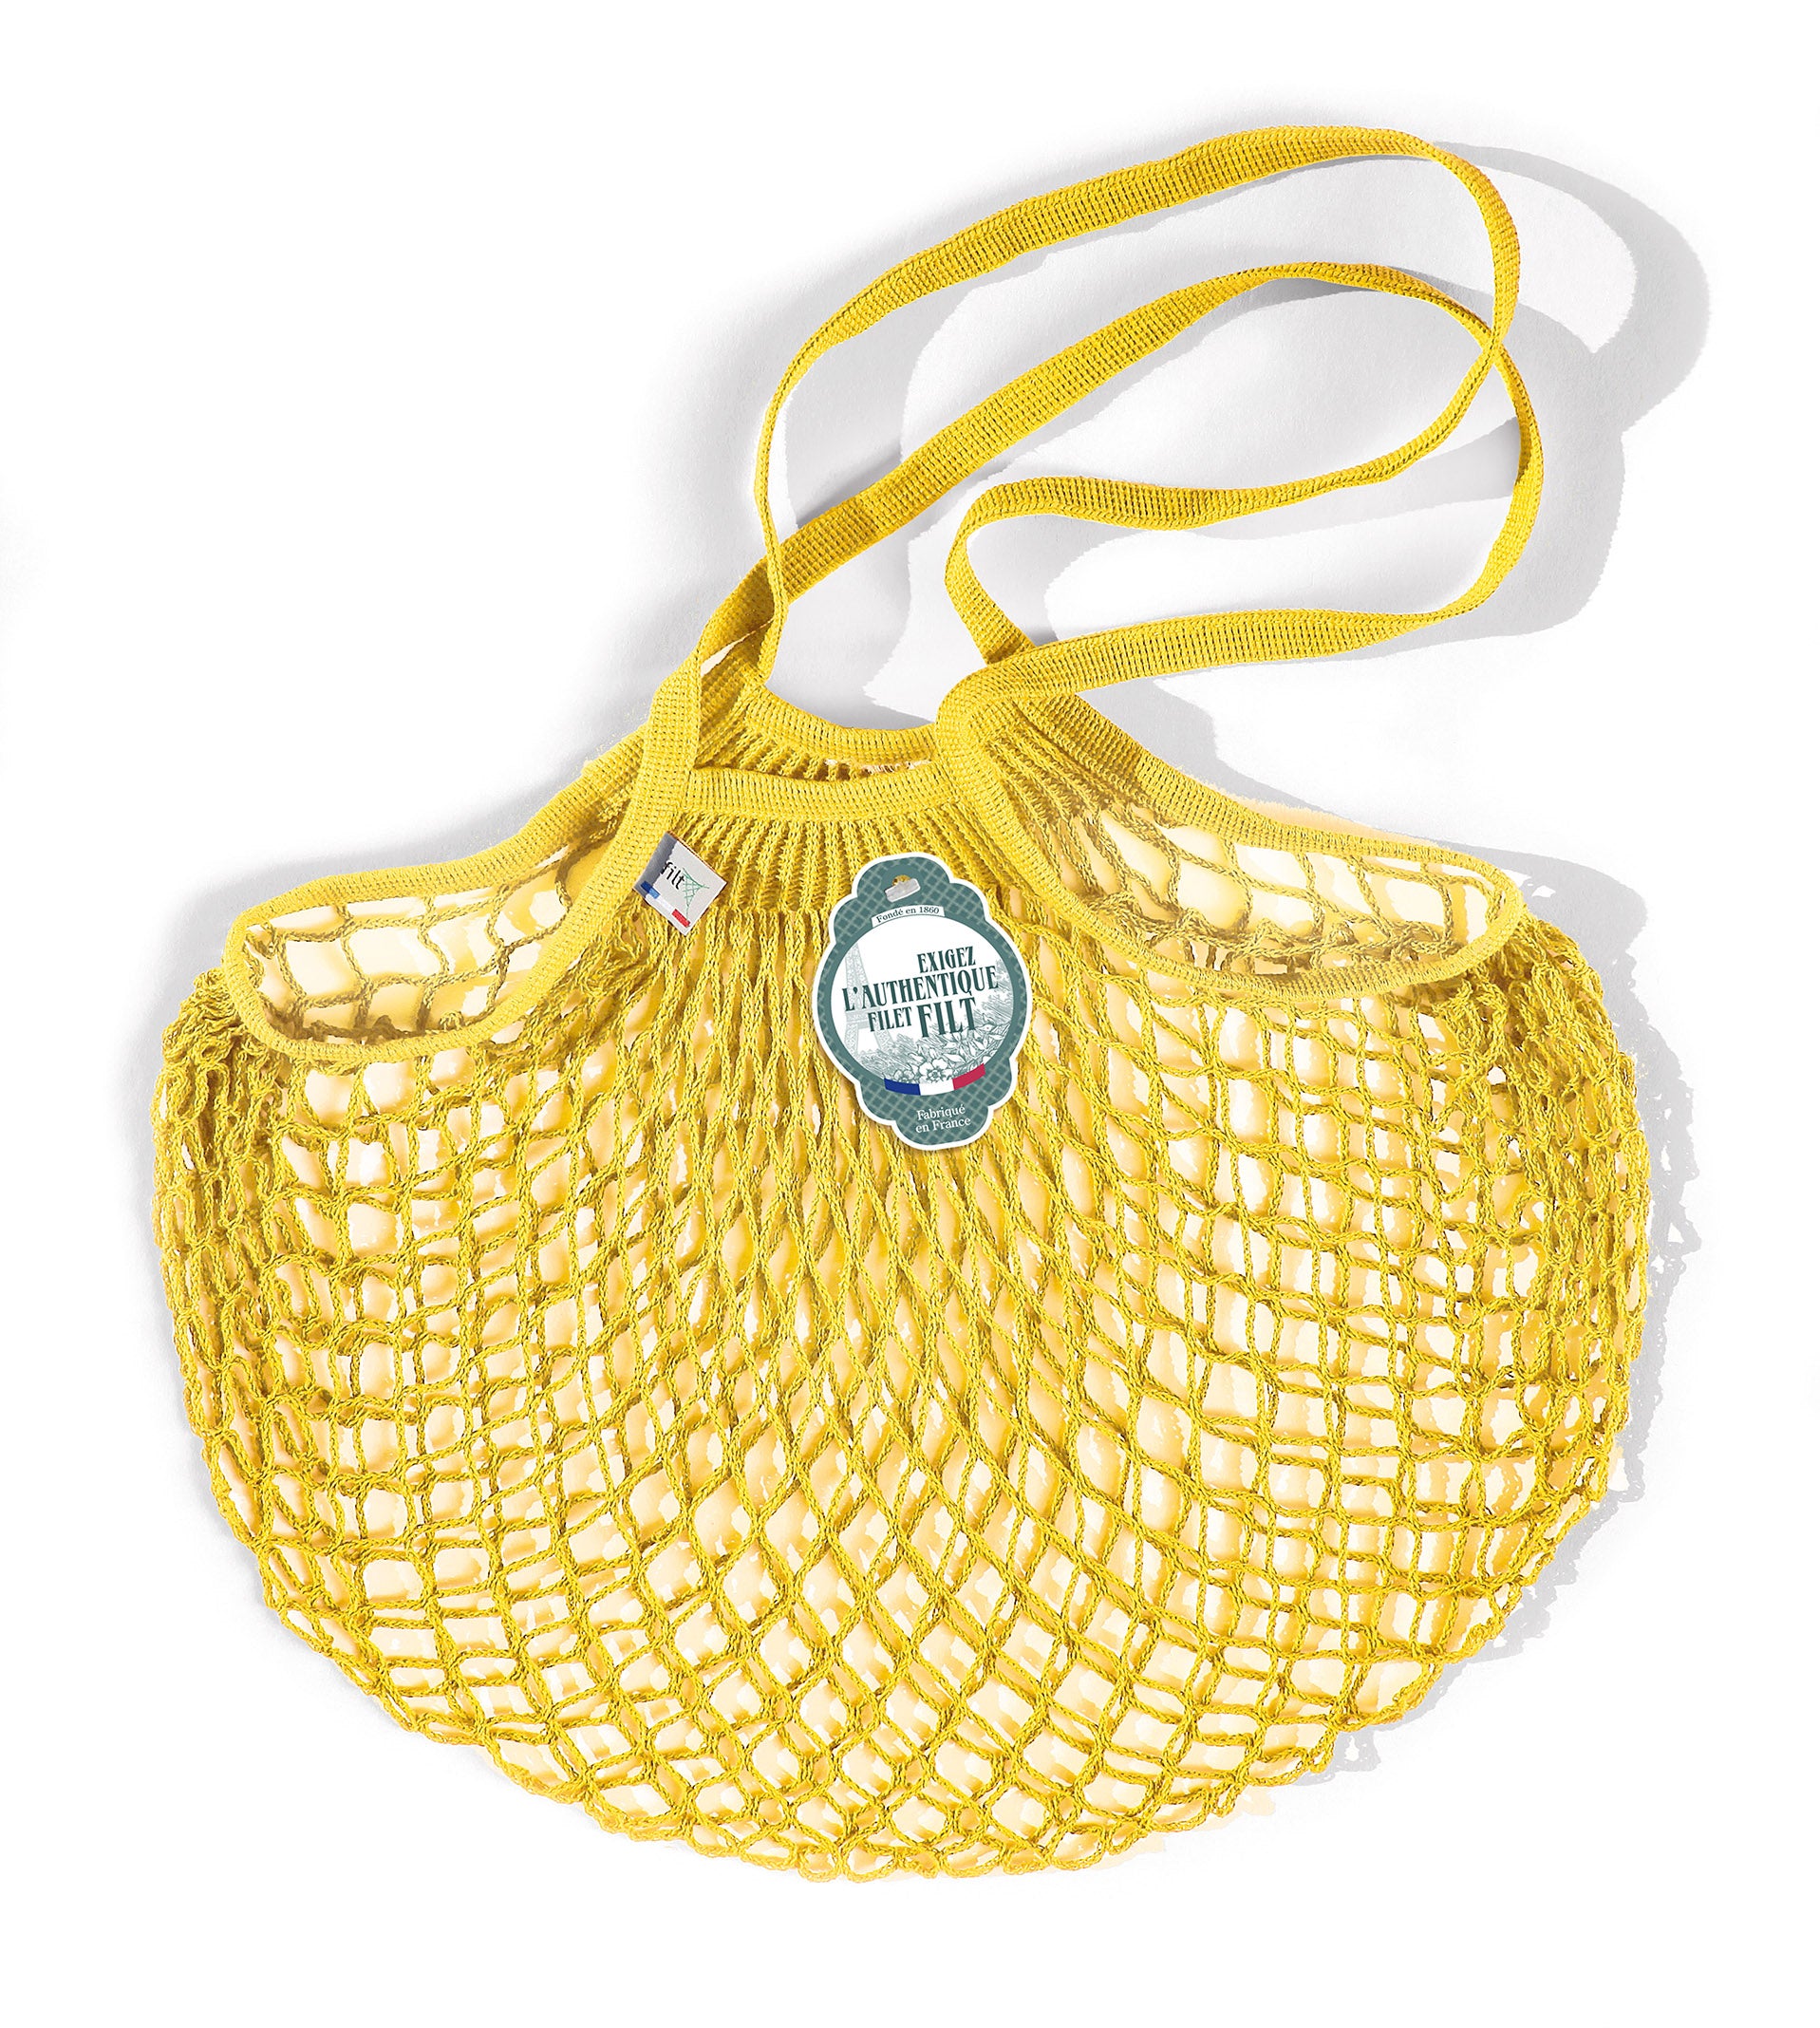 Filt Medium Bag in Bright Yellow Bag Filt Bags Brand_Filt Shopping Bags Textiles_Shoppers 220_JauneSolarium